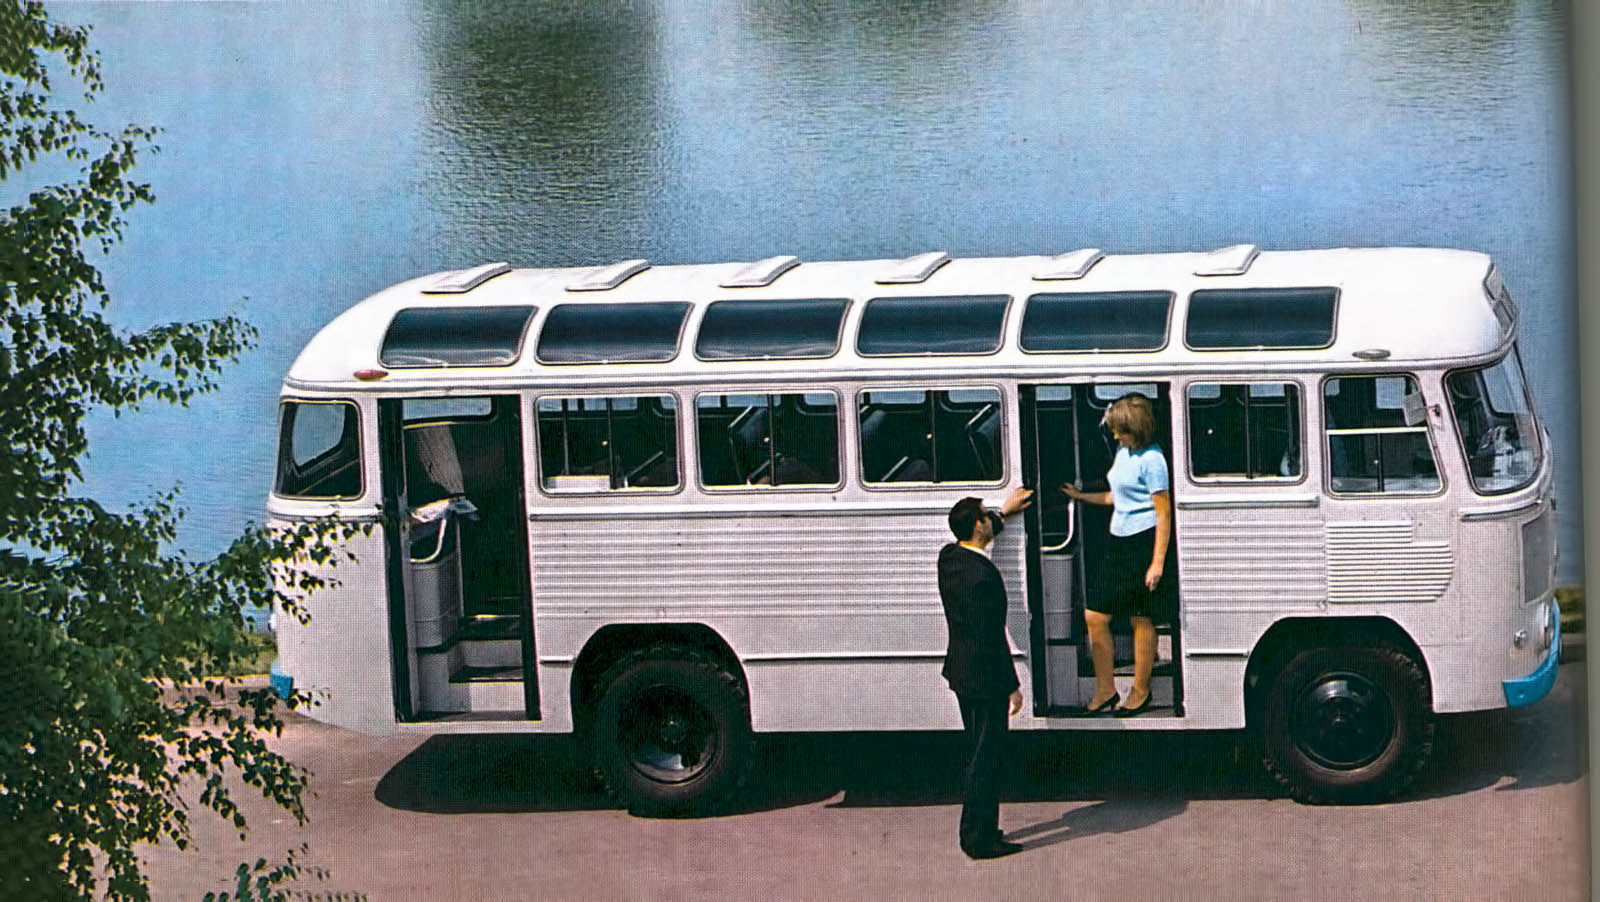 Советский общественный транспорт. ПАЗ 652 1955. ПАЗ-652 катафалк. ПАЗ-652 автобус. ПАЗ-652 ЗС-800.